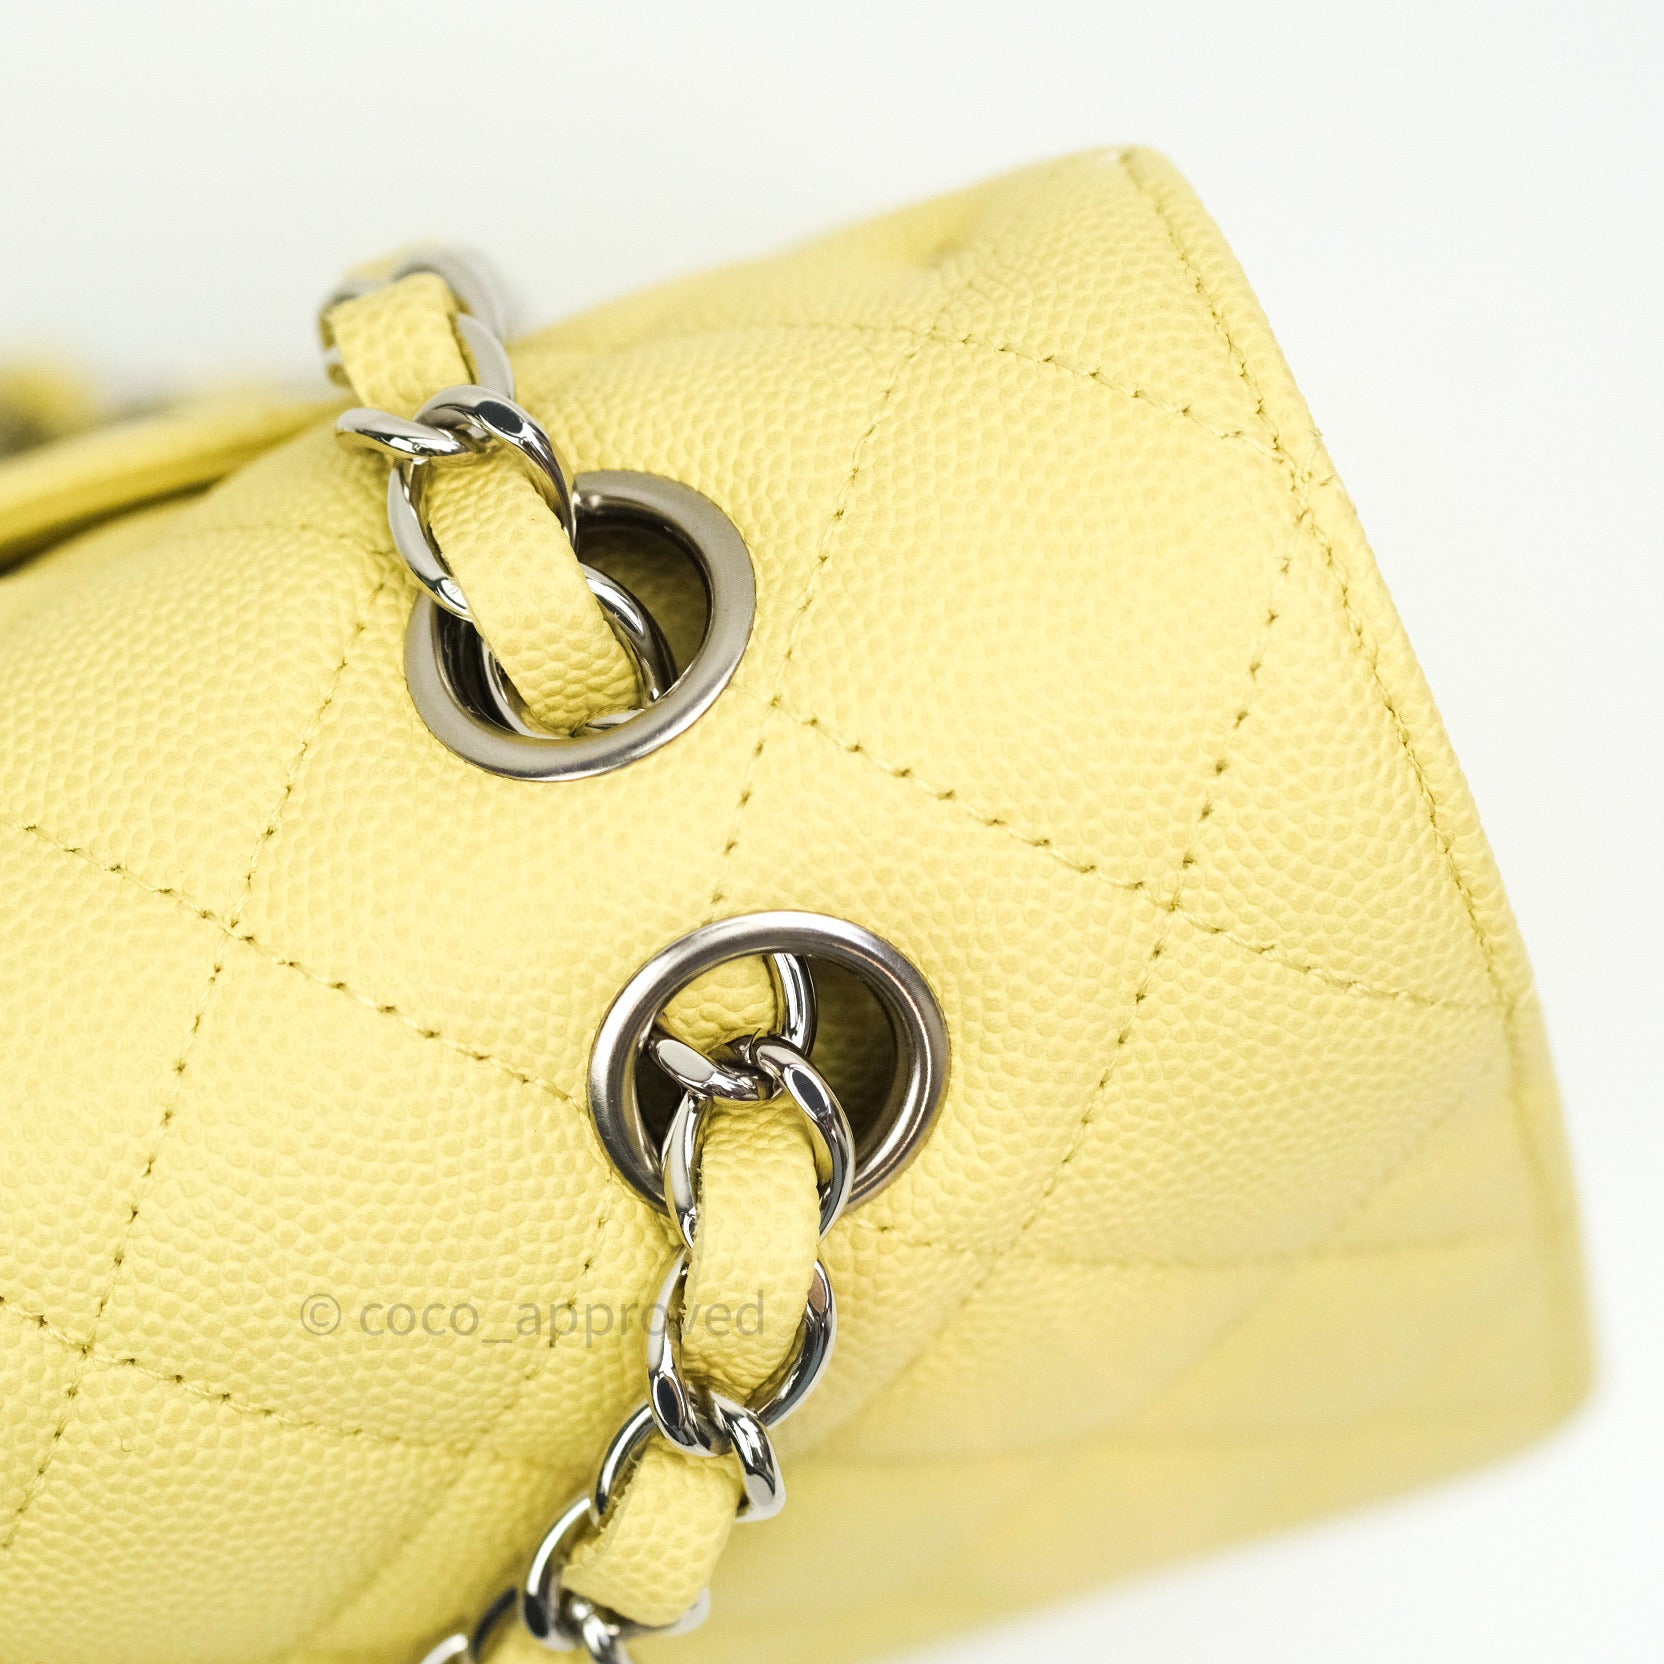 yellow chanel handbag